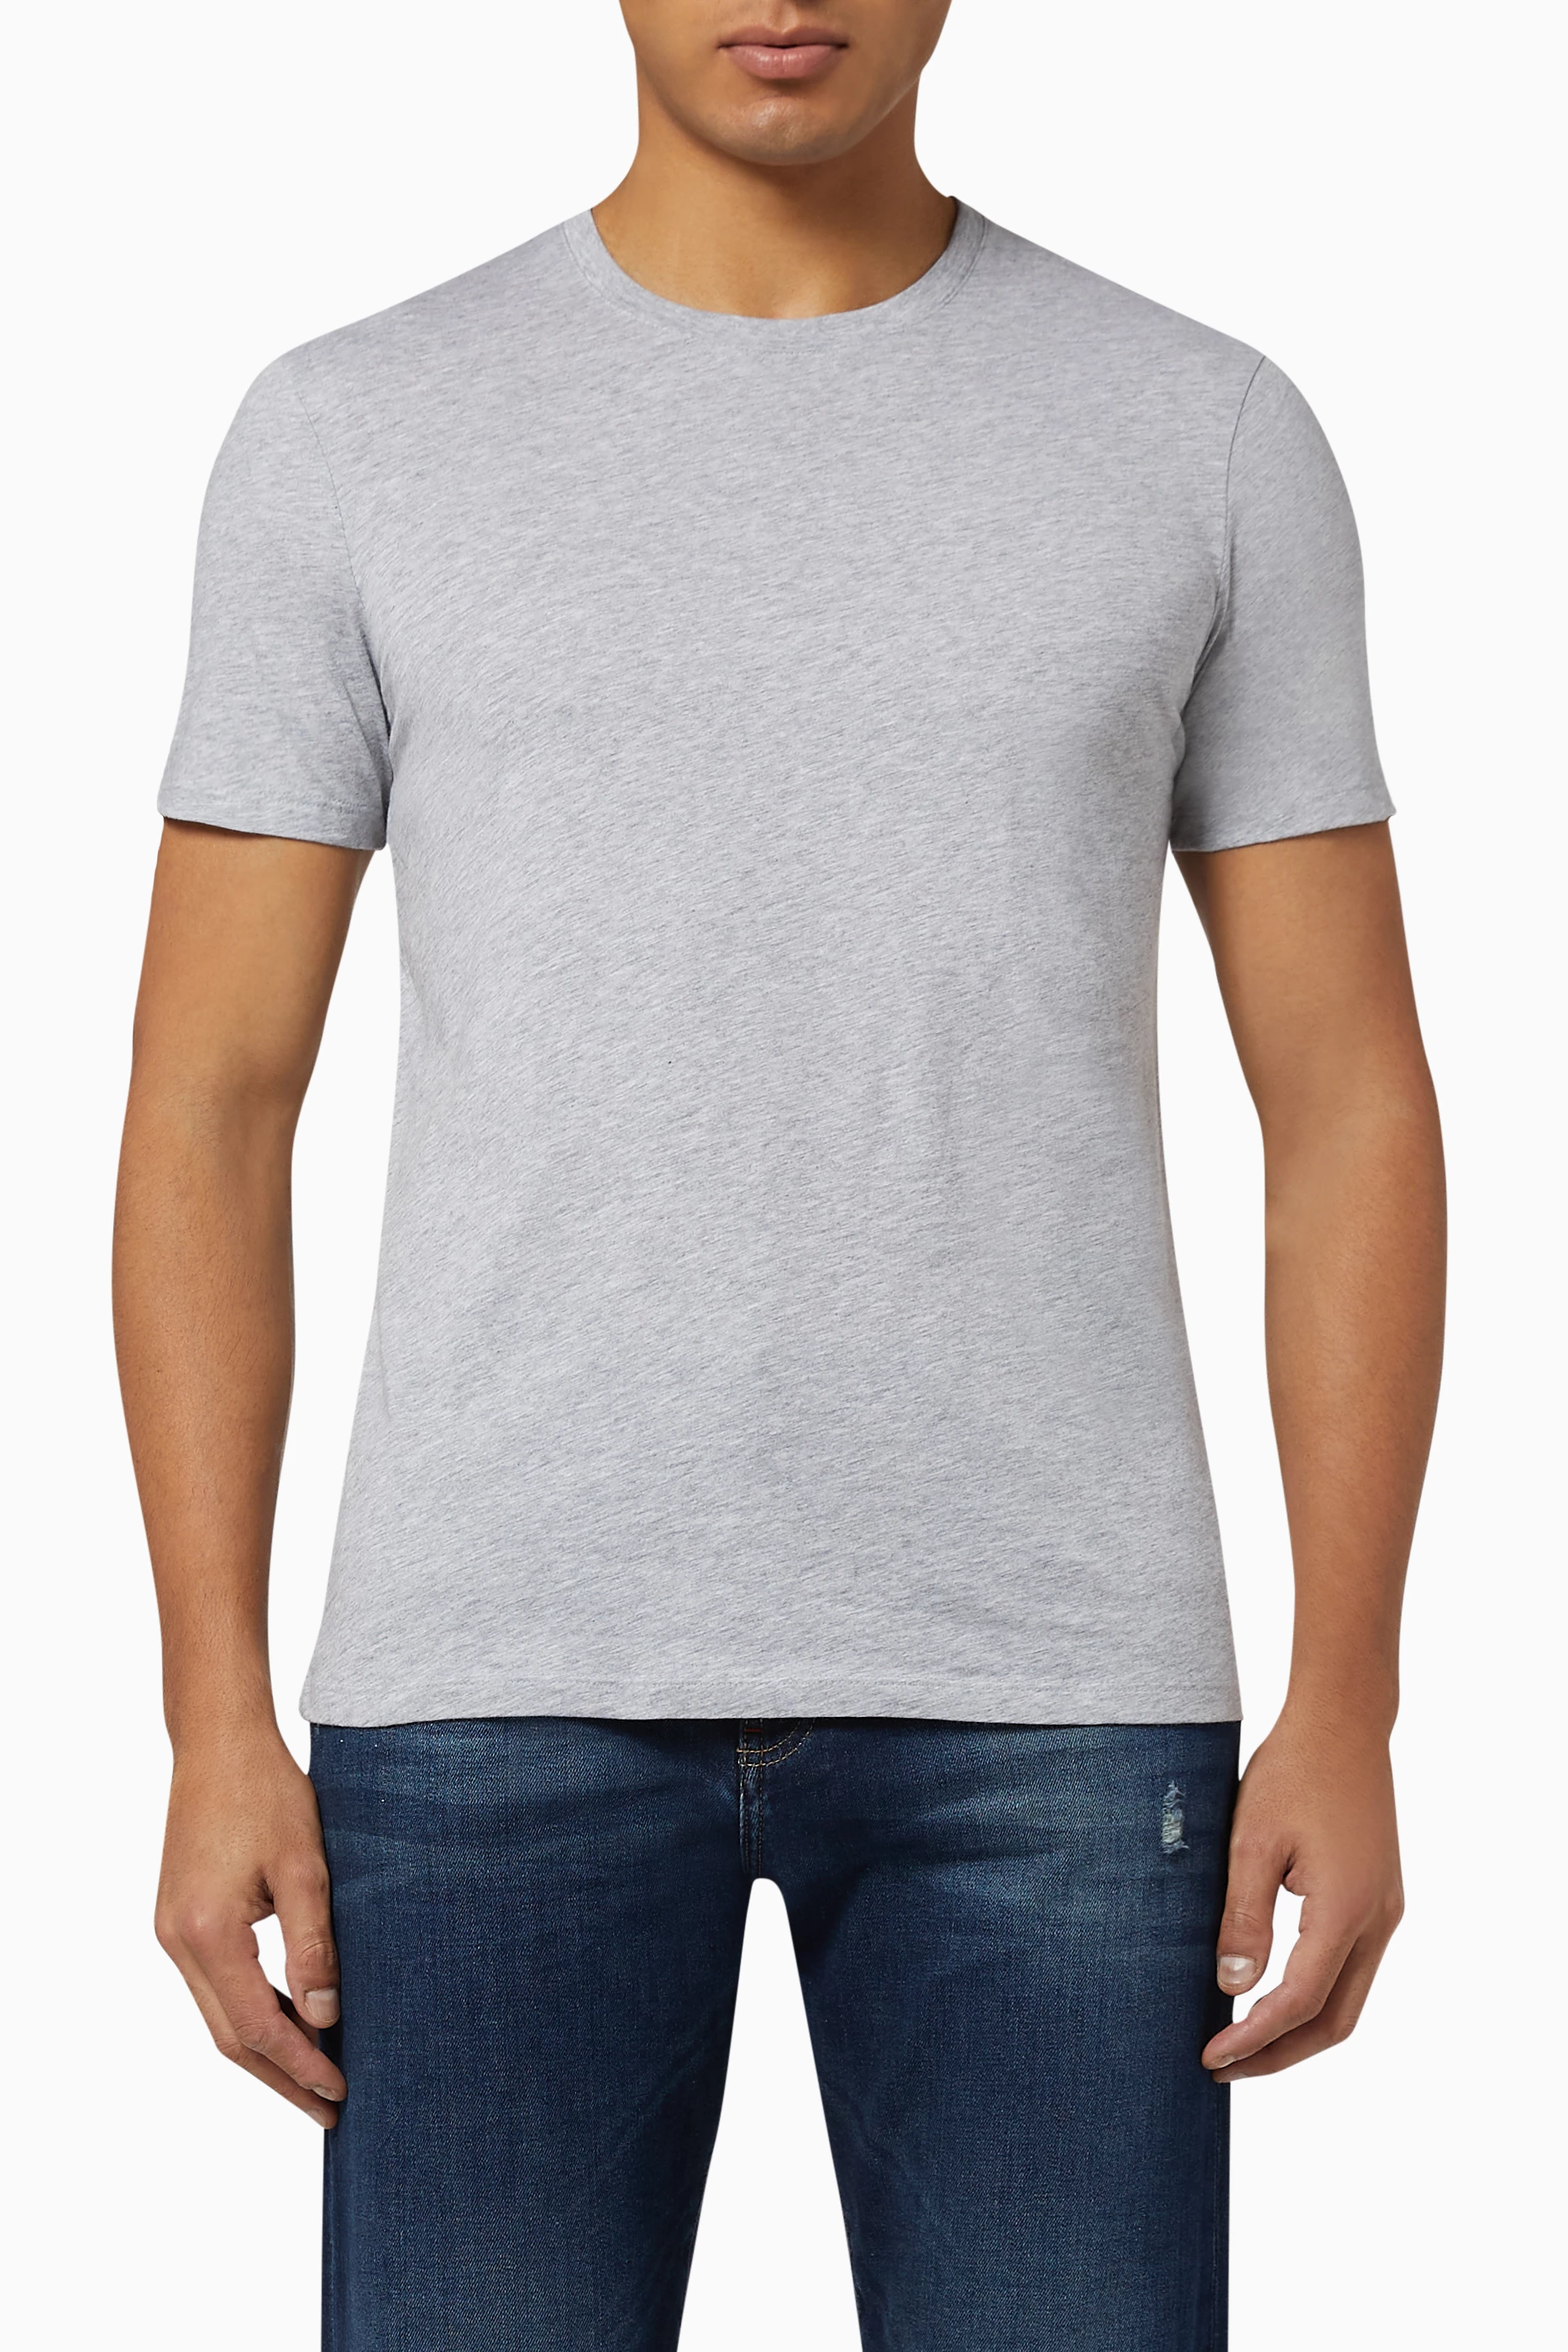 Shop Armani Exchange Grey Pima Cotton Crewneck T-Shirt for MEN | Ounass UAE